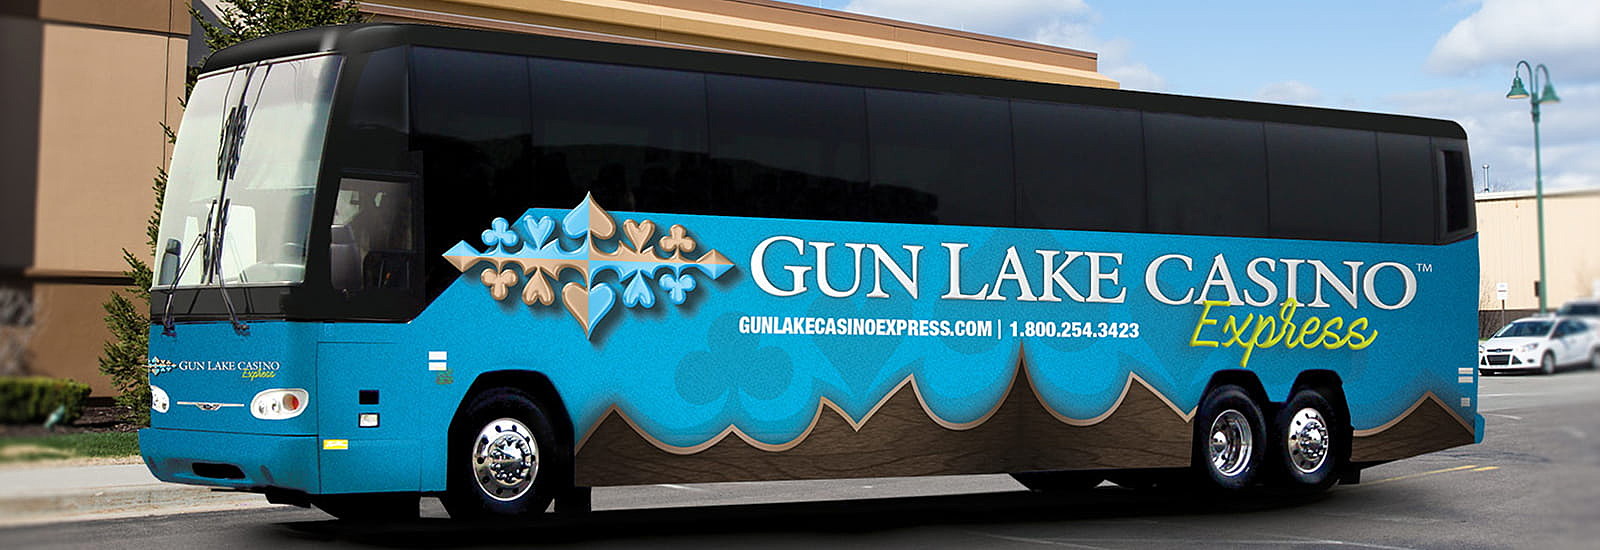 gun lake online casino michigan